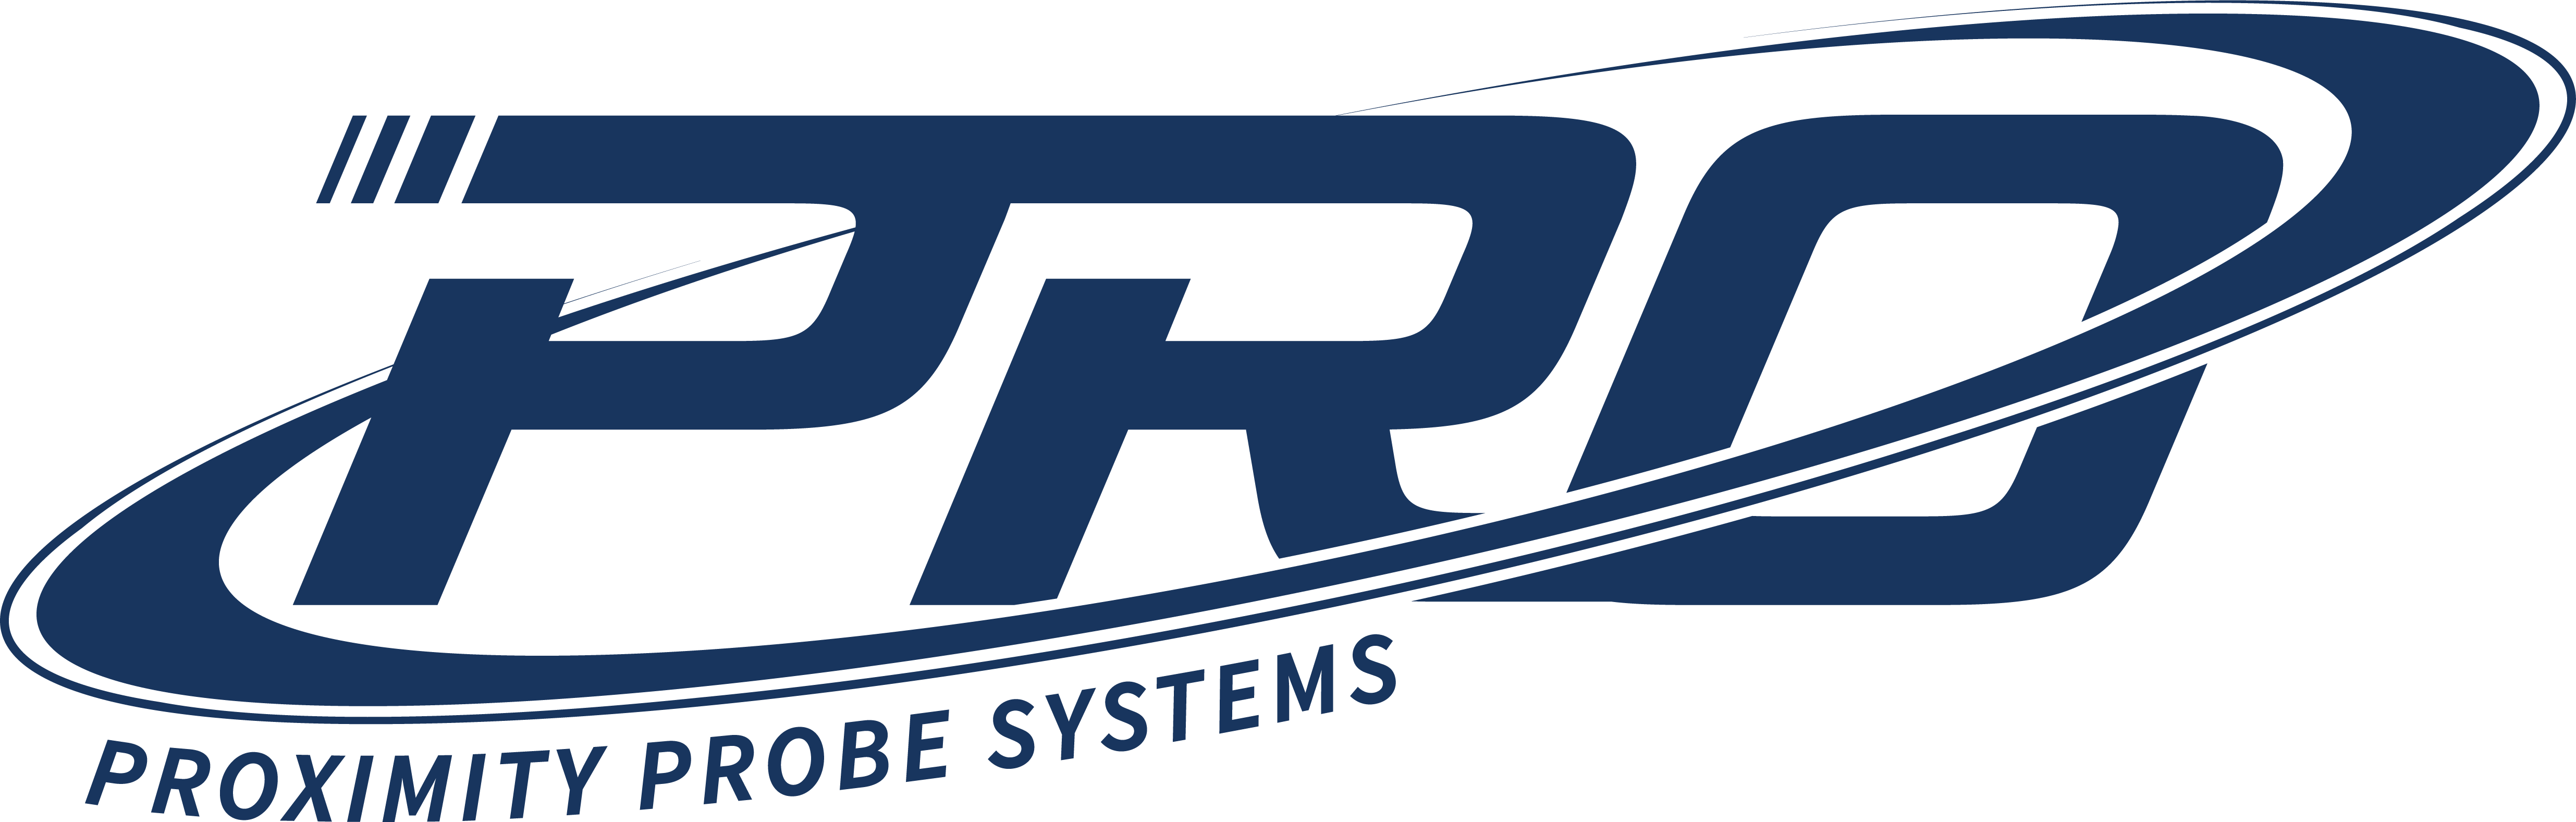 Navy blue PRO Line logo with proximity probe systems tagline underneath